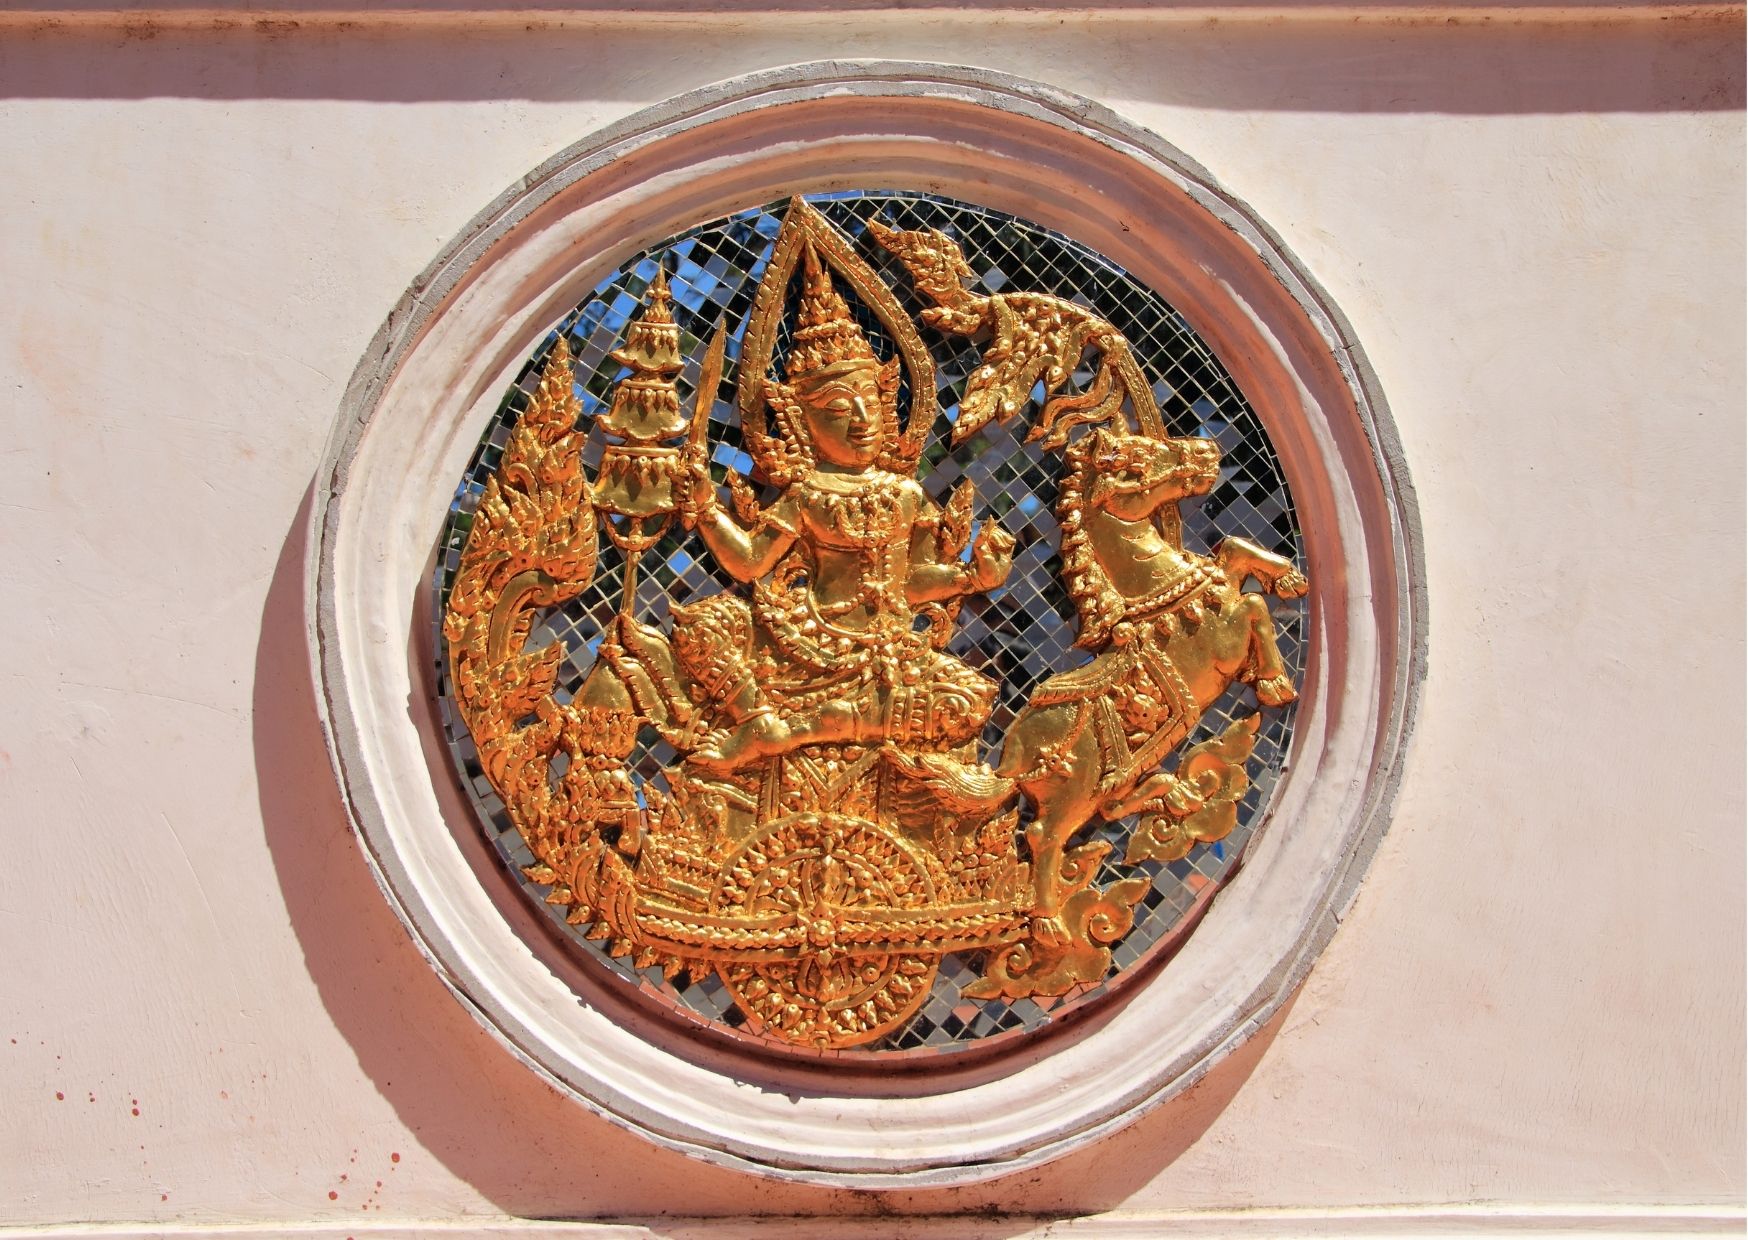 Statue of Sun God Surya in Thailand